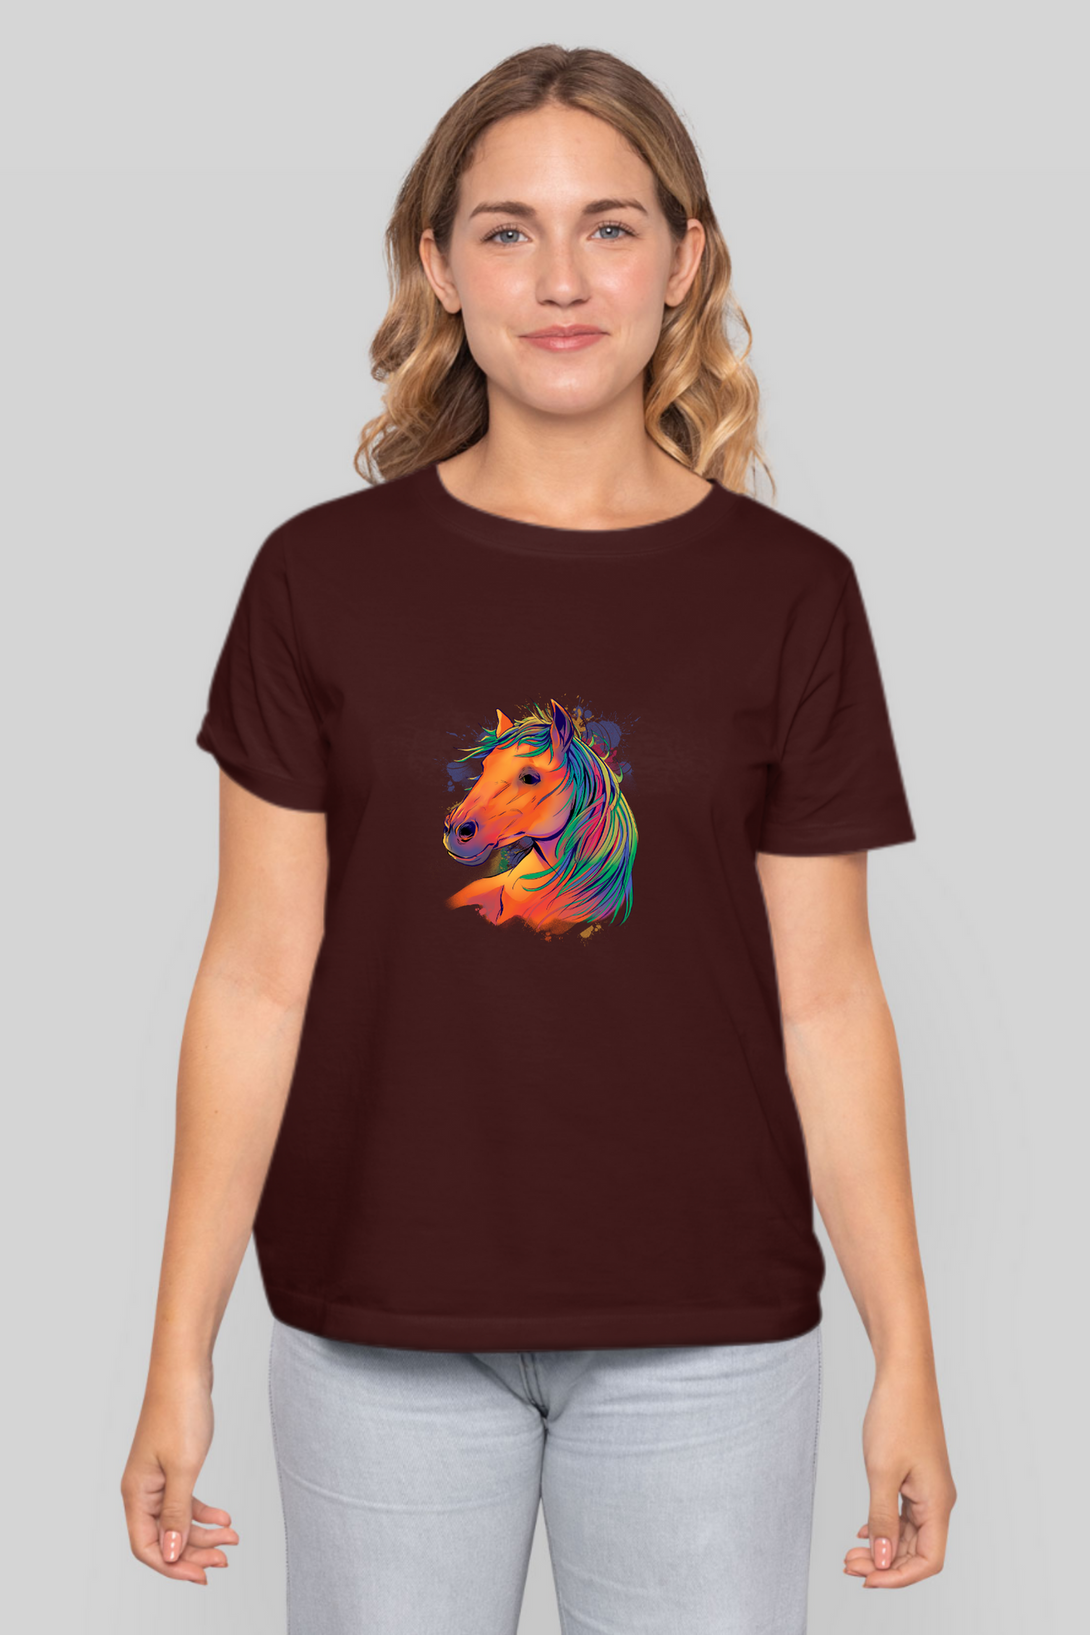 Horse Art Printed T-Shirt For Women - WowWaves - 8